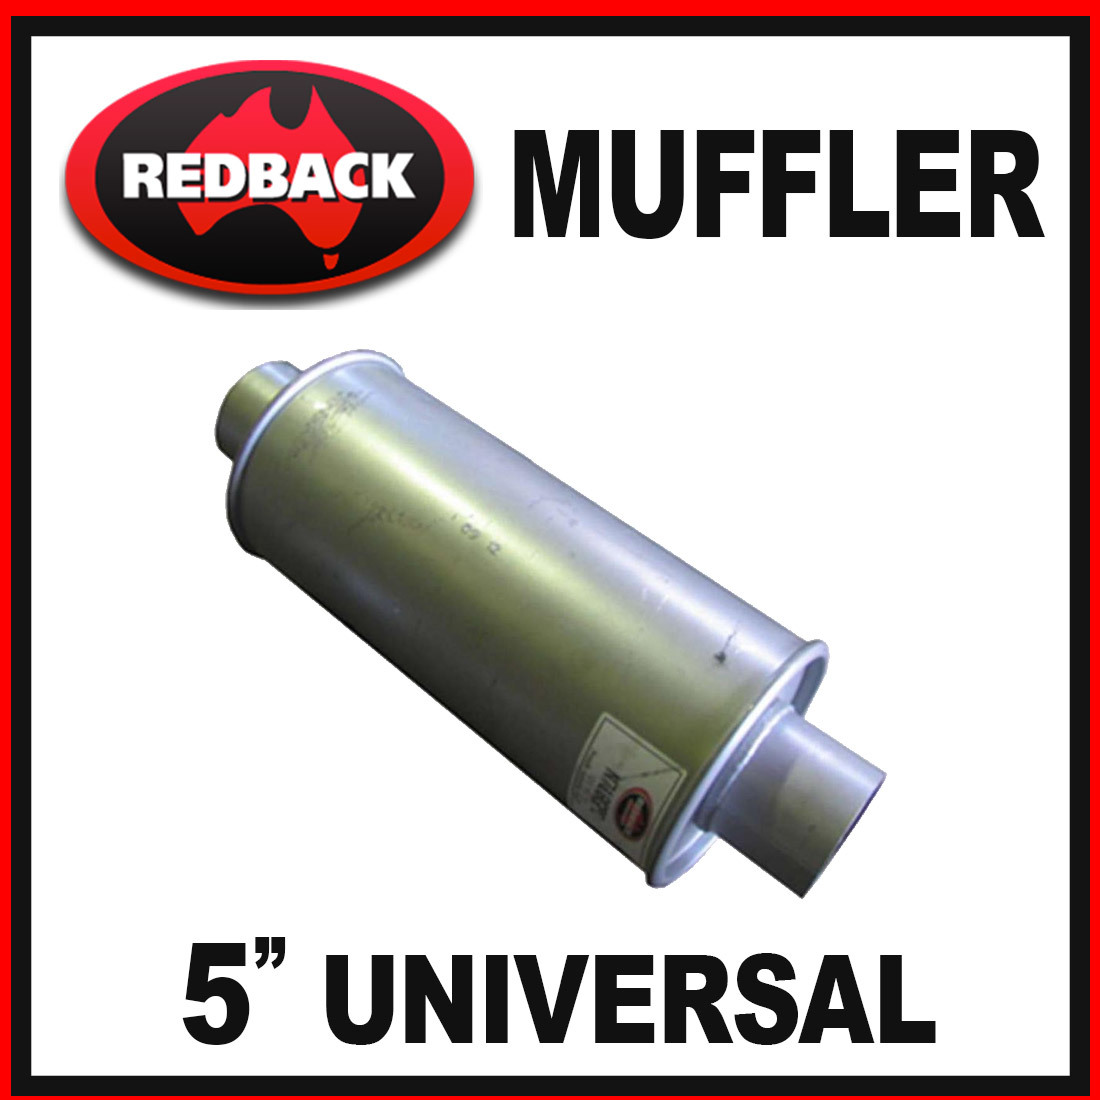 Redback 5" Universal Muffler image